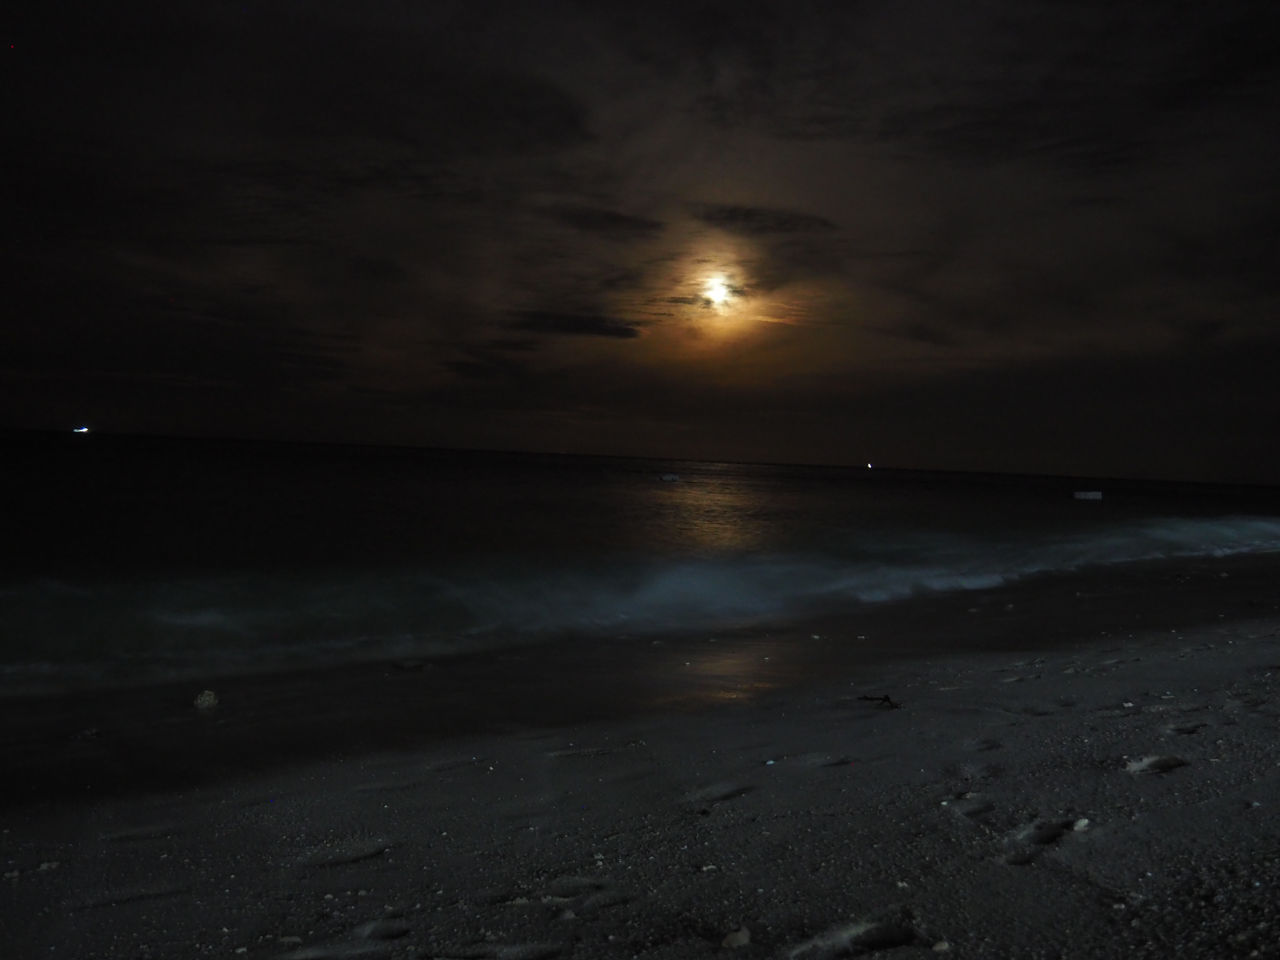 Full moon seen from the beach at Pulau Sembilan